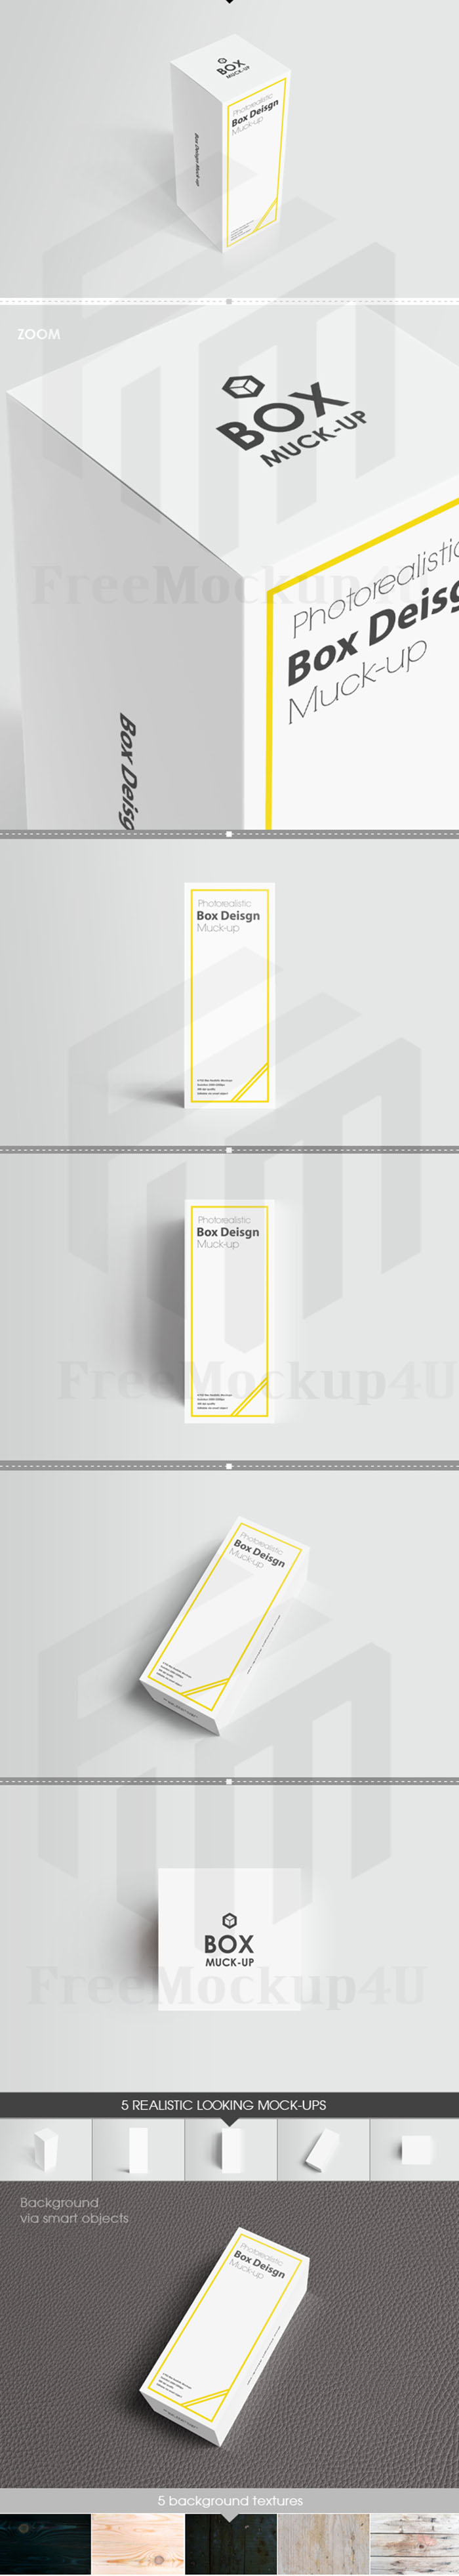 Photorealistic Box Design Mockup Psd Bundle Pack